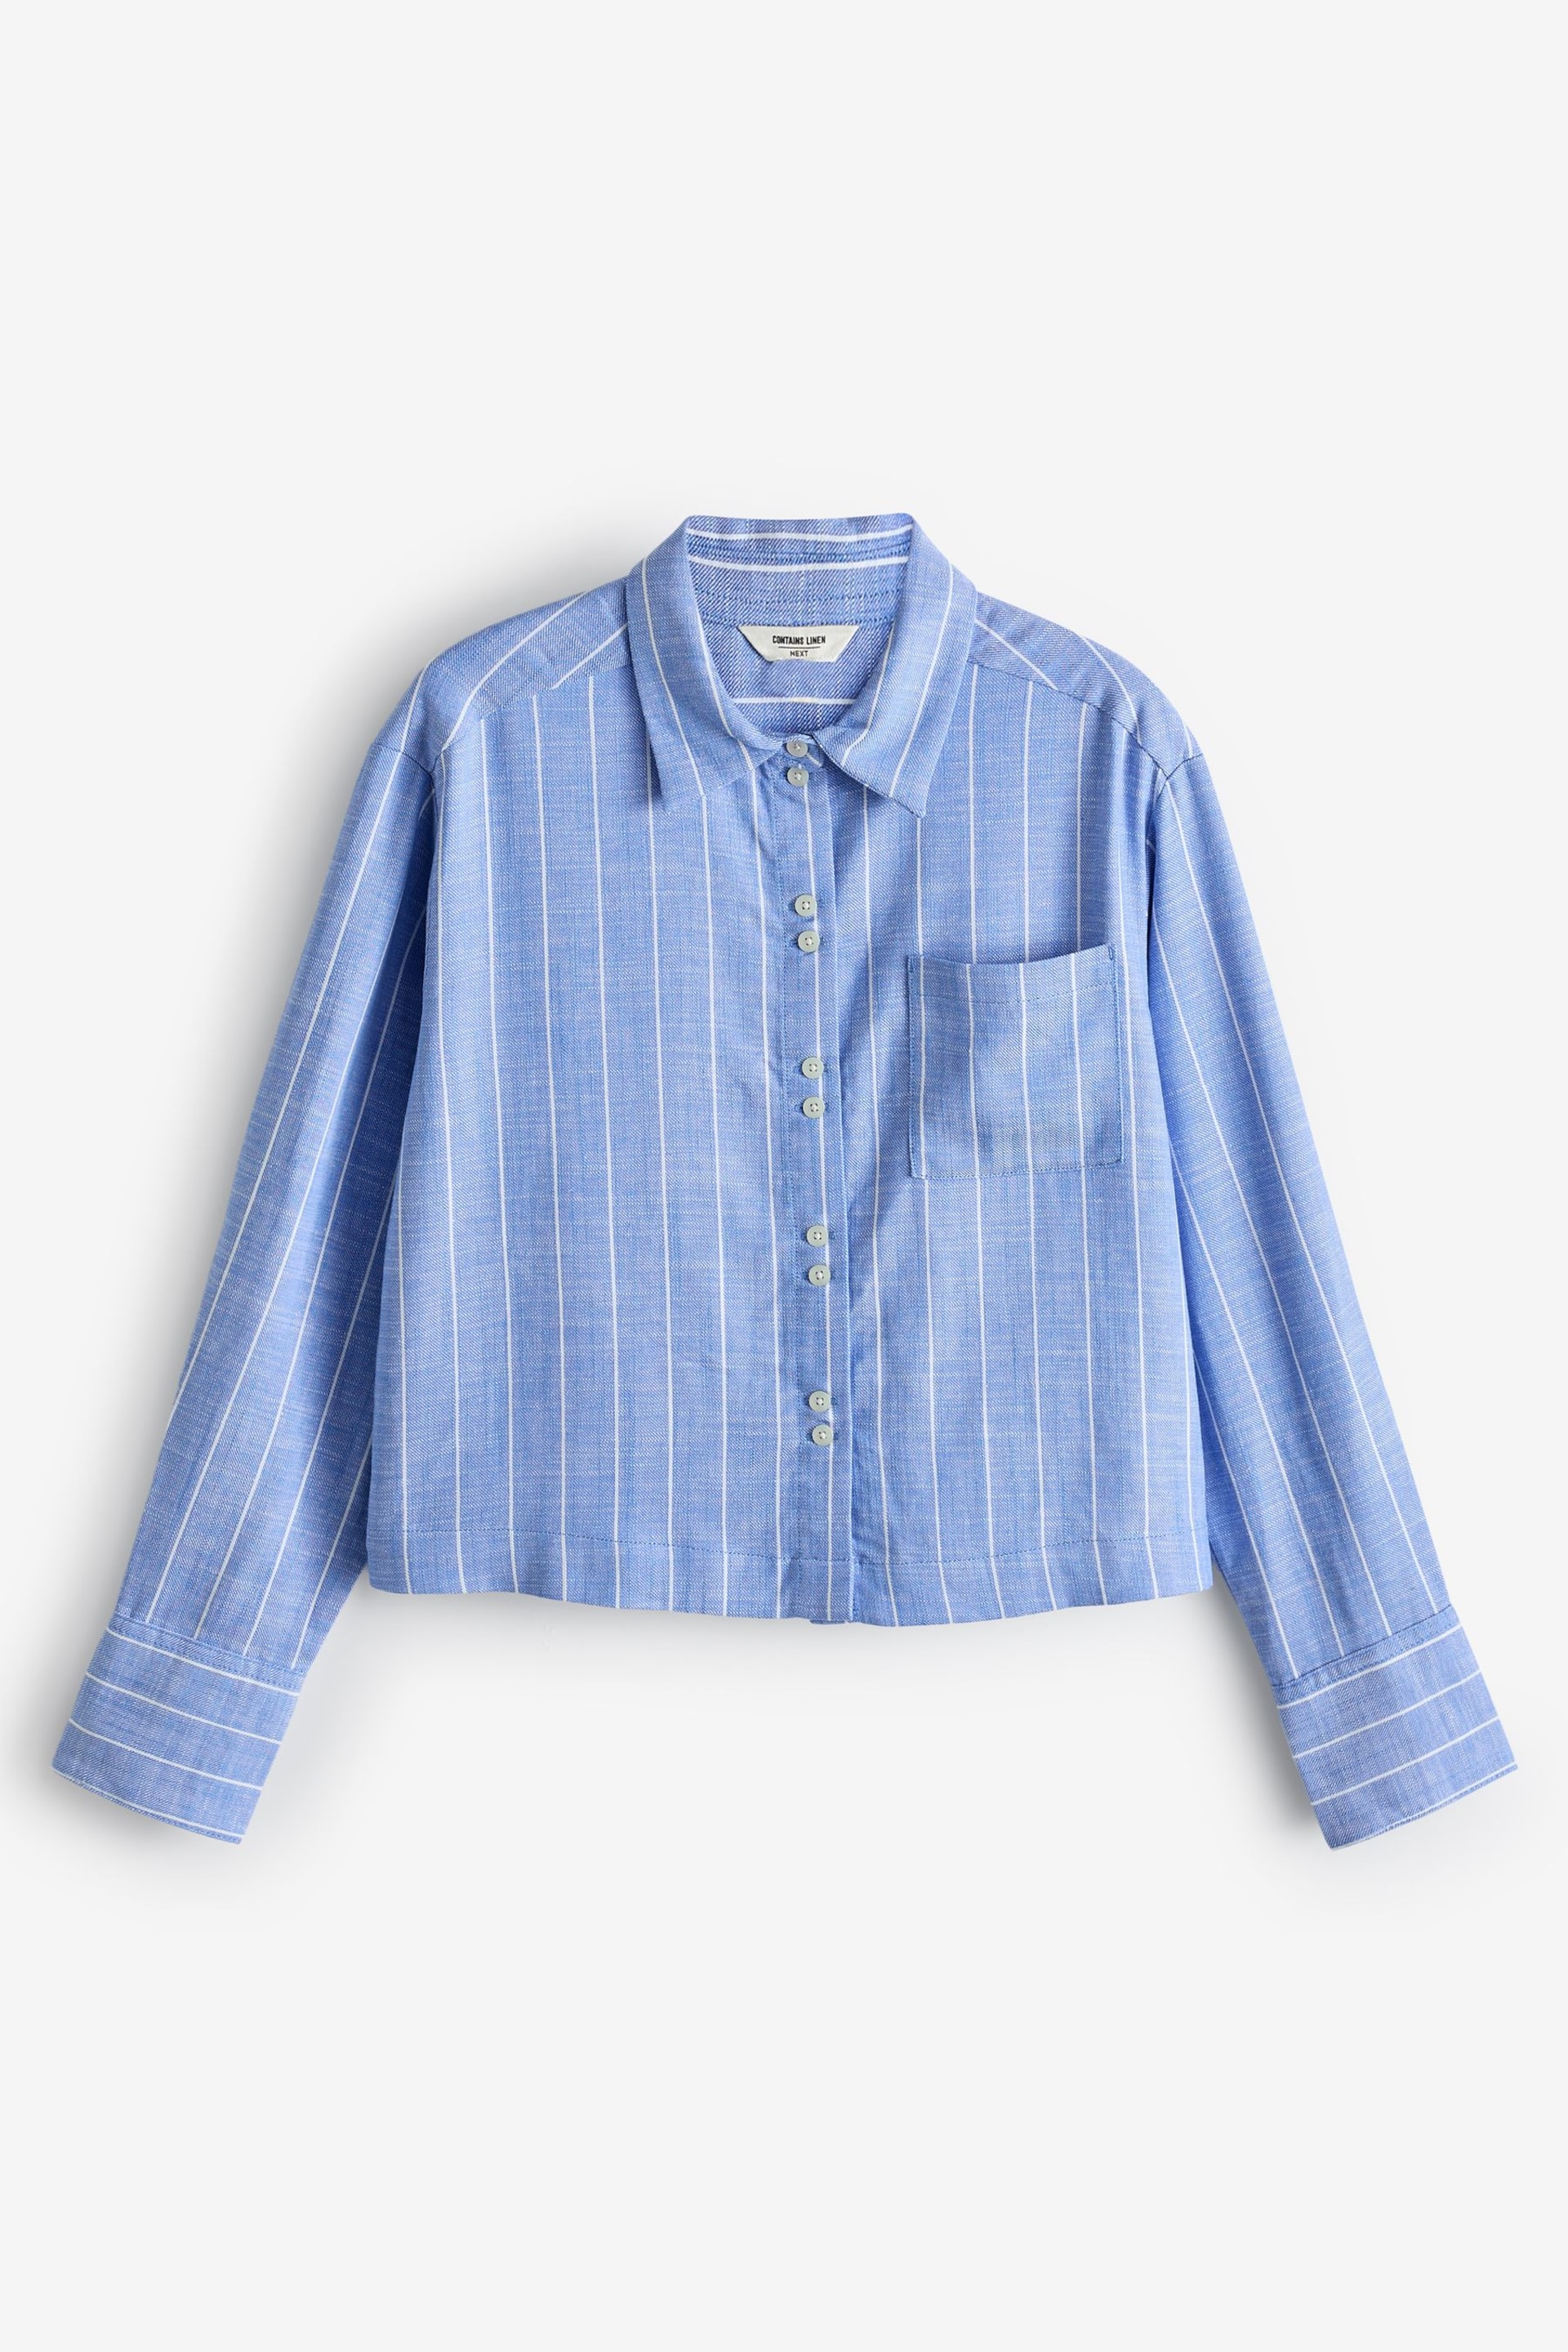 Blue/White Linen Striped Shirt - Image 6 of 7